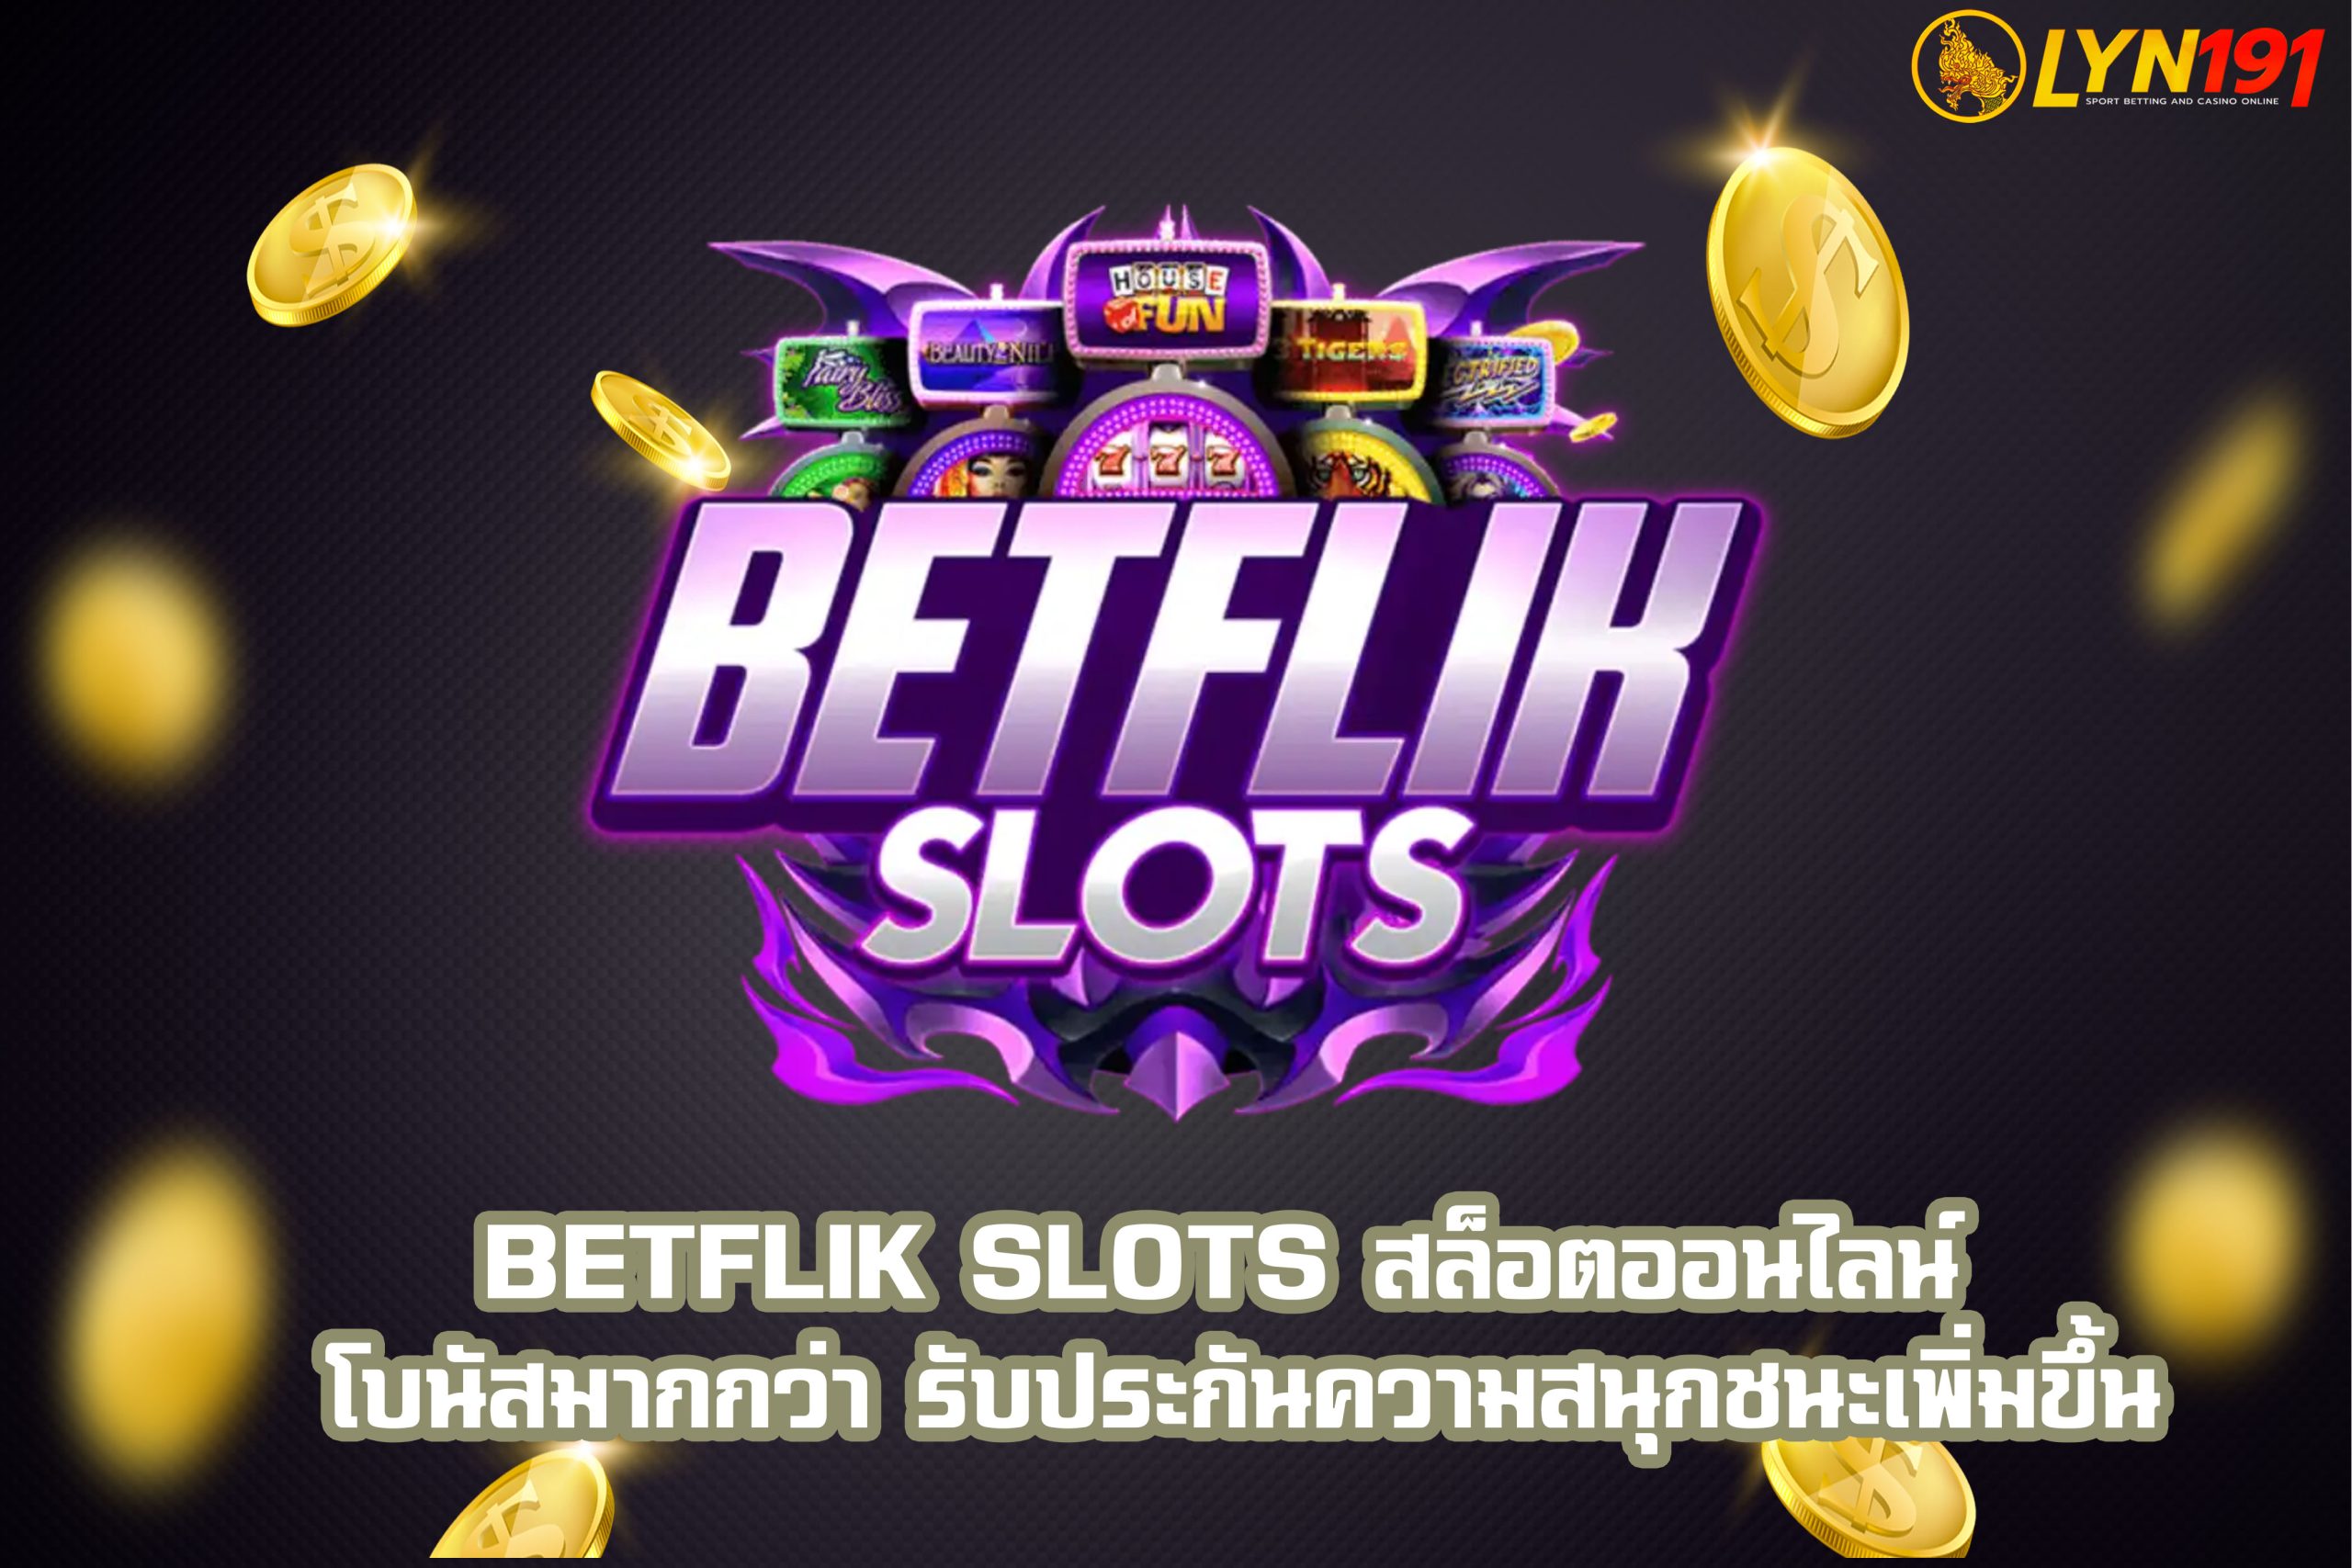 Betflik Slots สล็อตออนไลน์ โบนัสมากกว่า รับประกันความสนุกชนะเพิ่มขึ้น